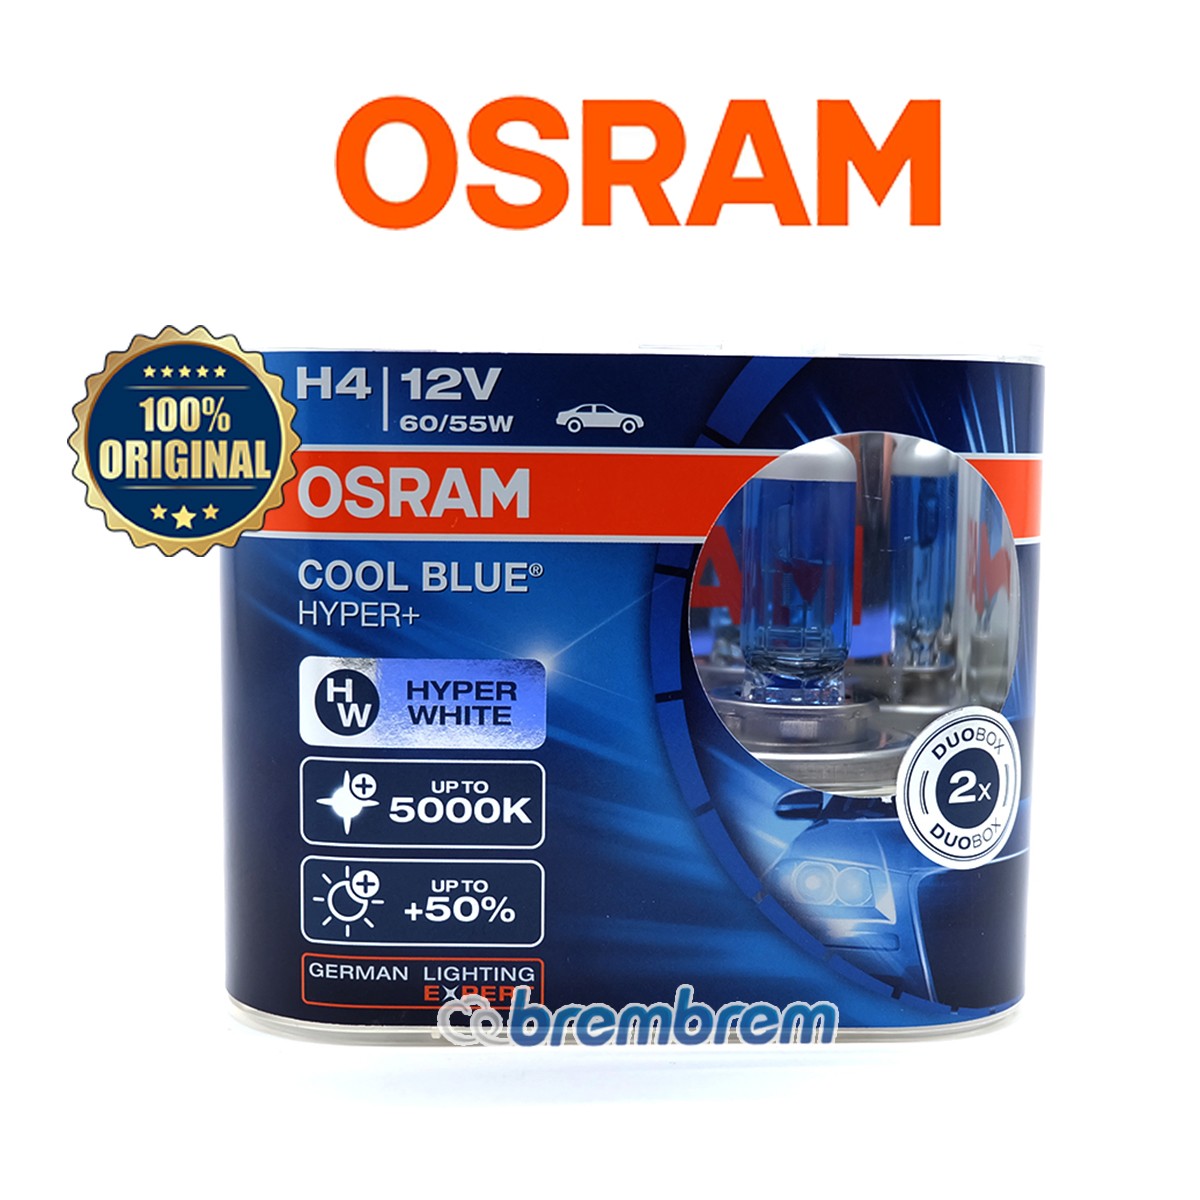 OSRAM COOL BLUE HYPER PLUS H4 (5000K) - LAMPU HALOGEN